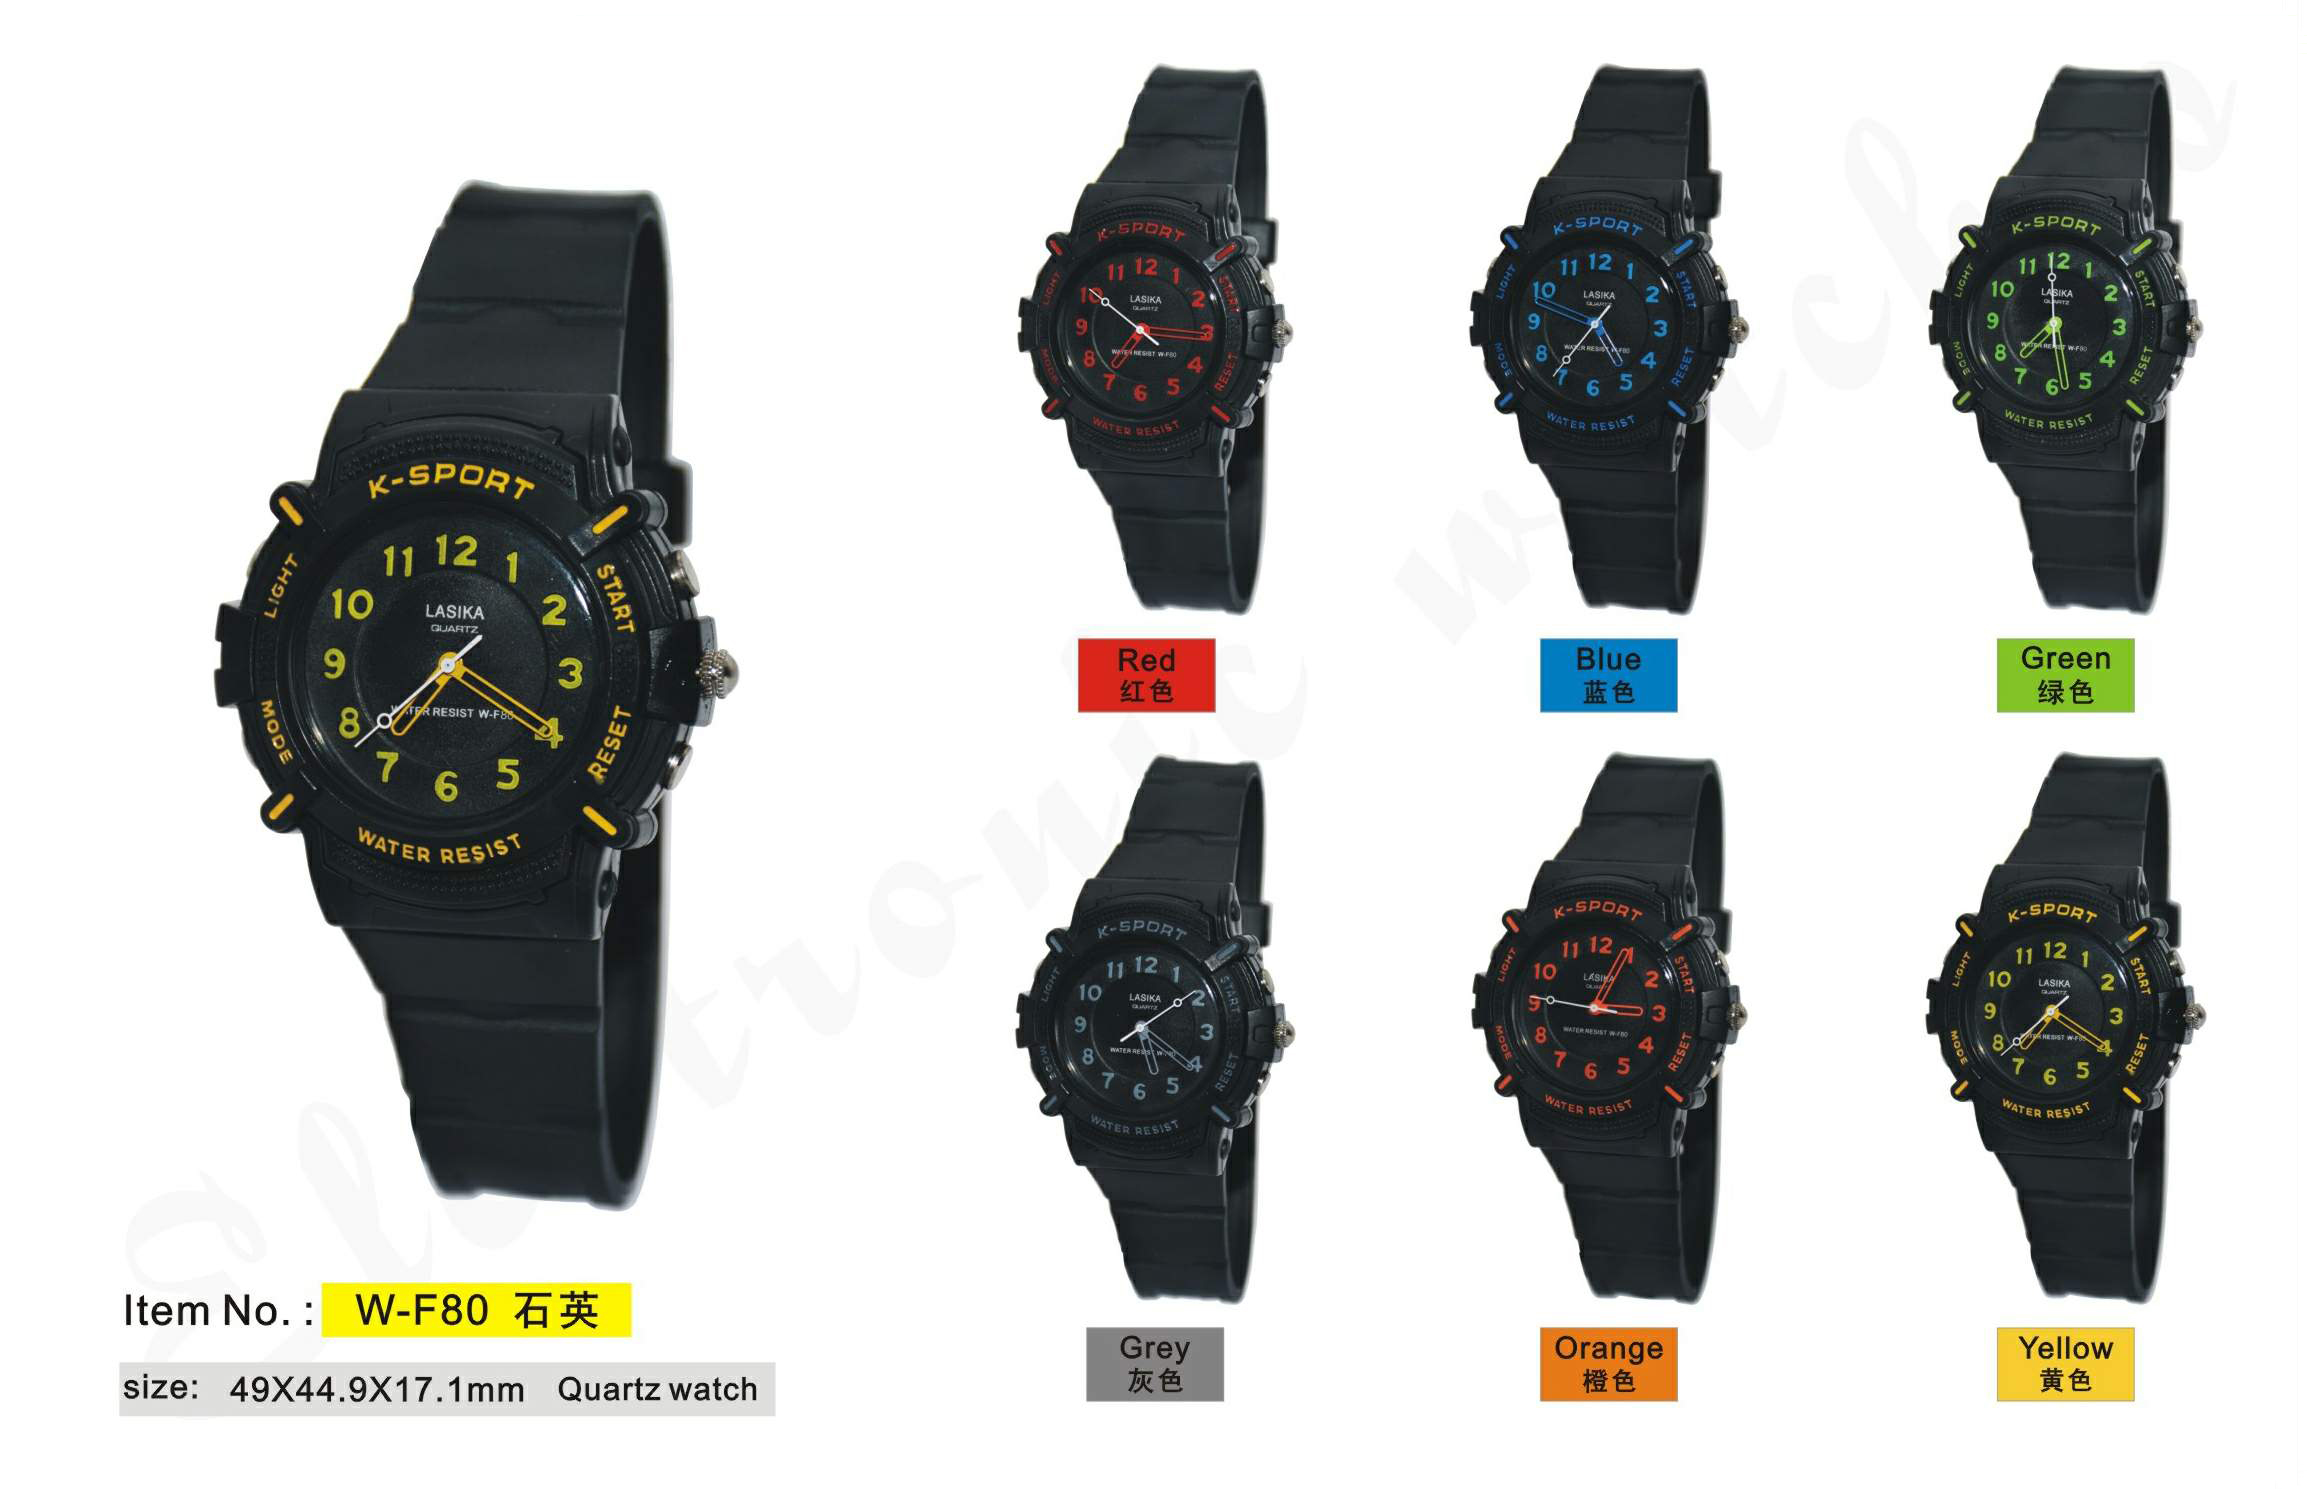 Black colour wrist watch #80